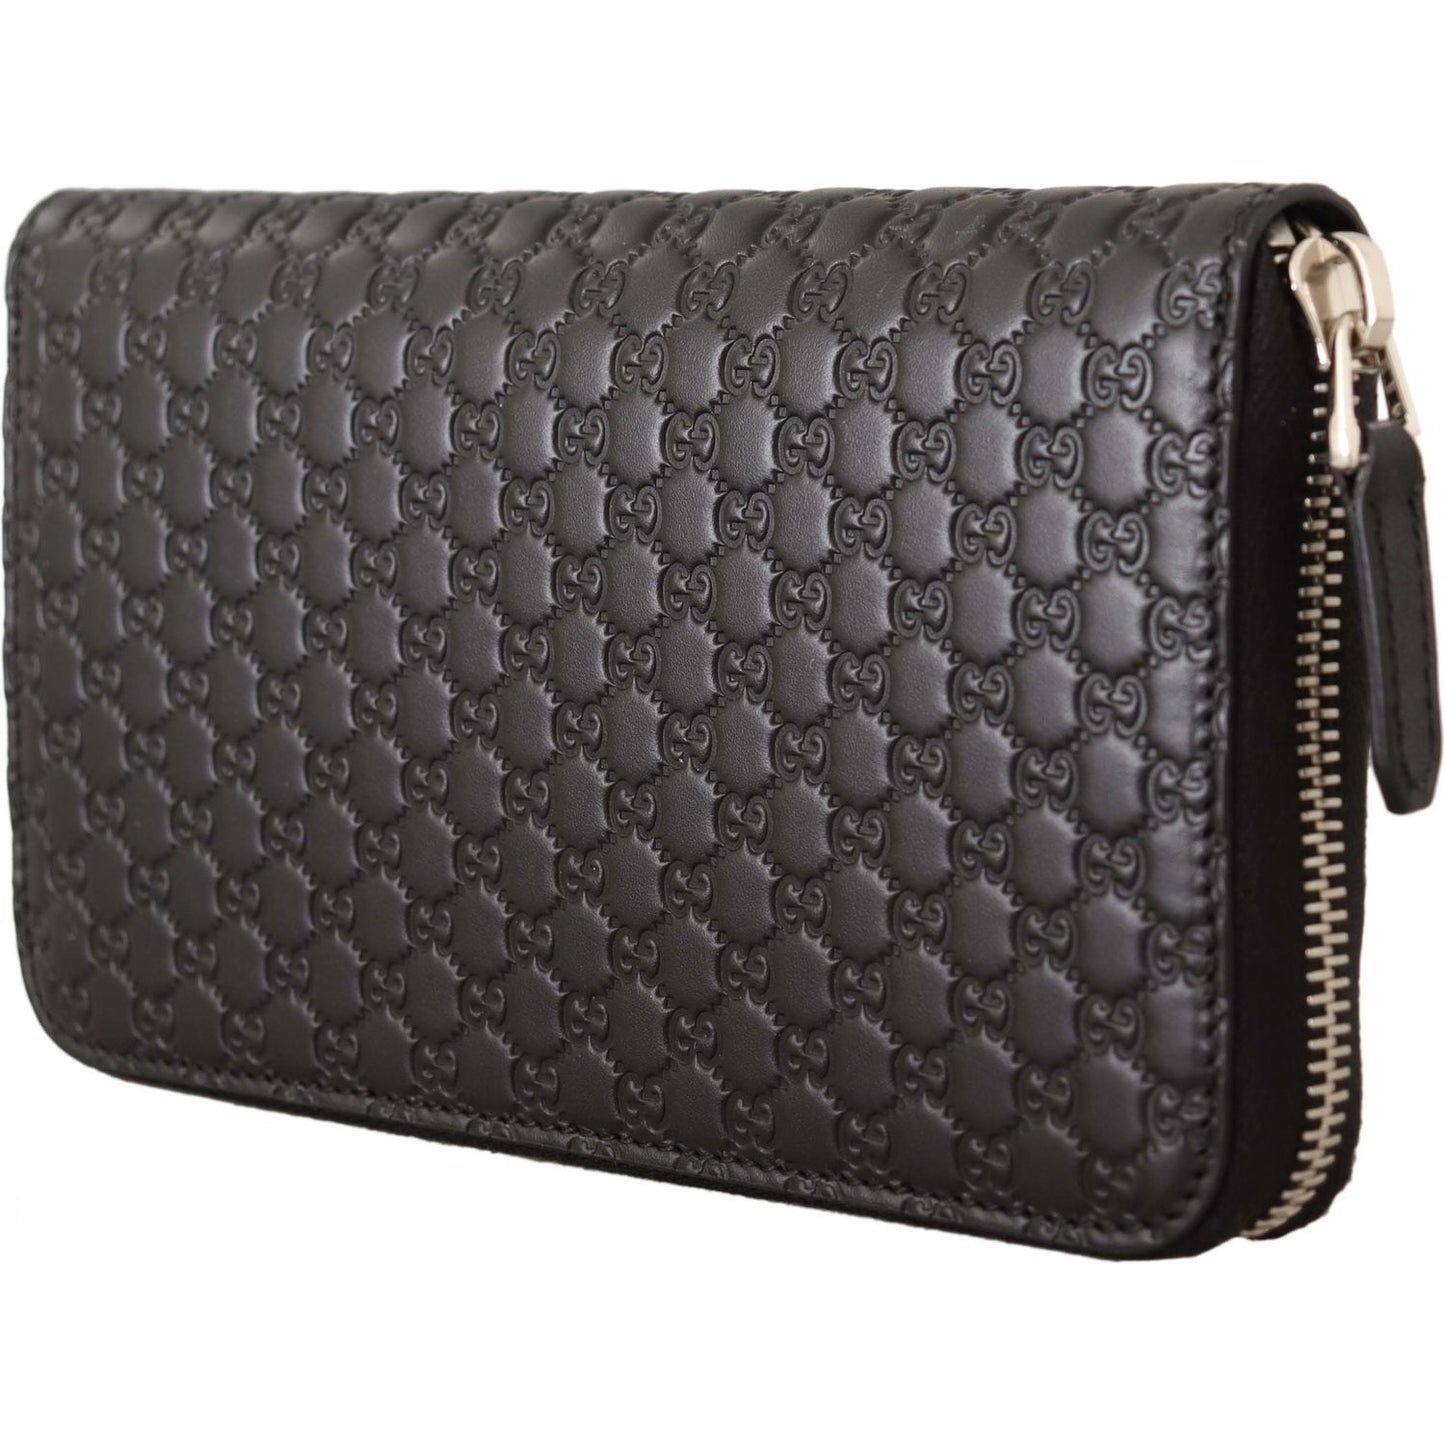 Gucci Elegant Black Leather Zip-Around Wallet black-wallet-microguccissima-leather-zipper-wallet IMG_7651-scaled-51315e30-7e6.jpg